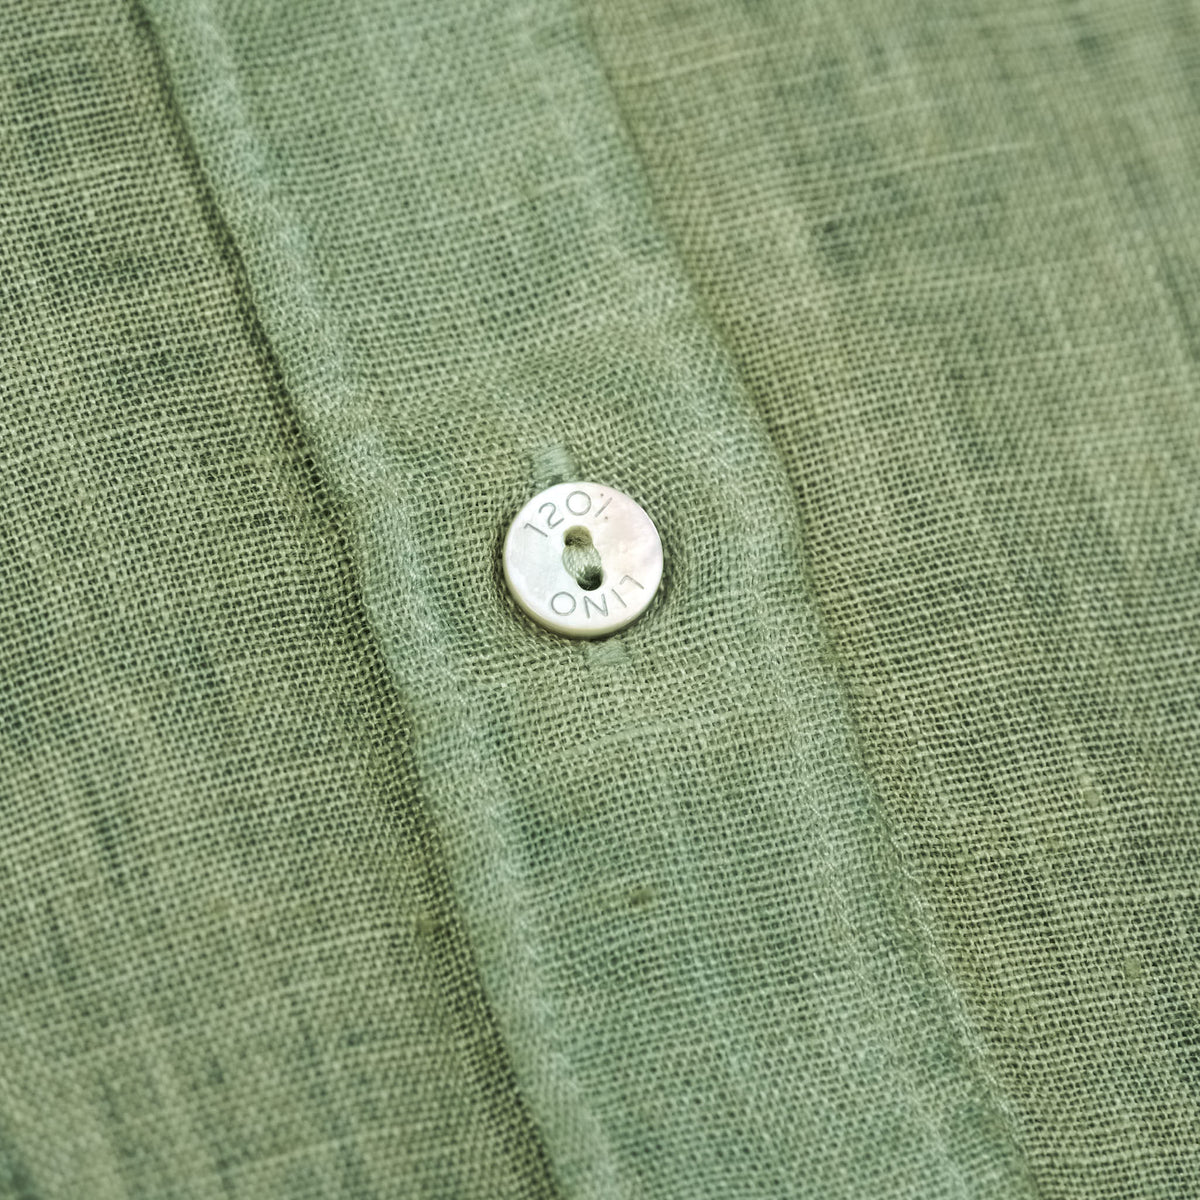 120% Lino Ladies Long Sleeve Classic Linen Shirt